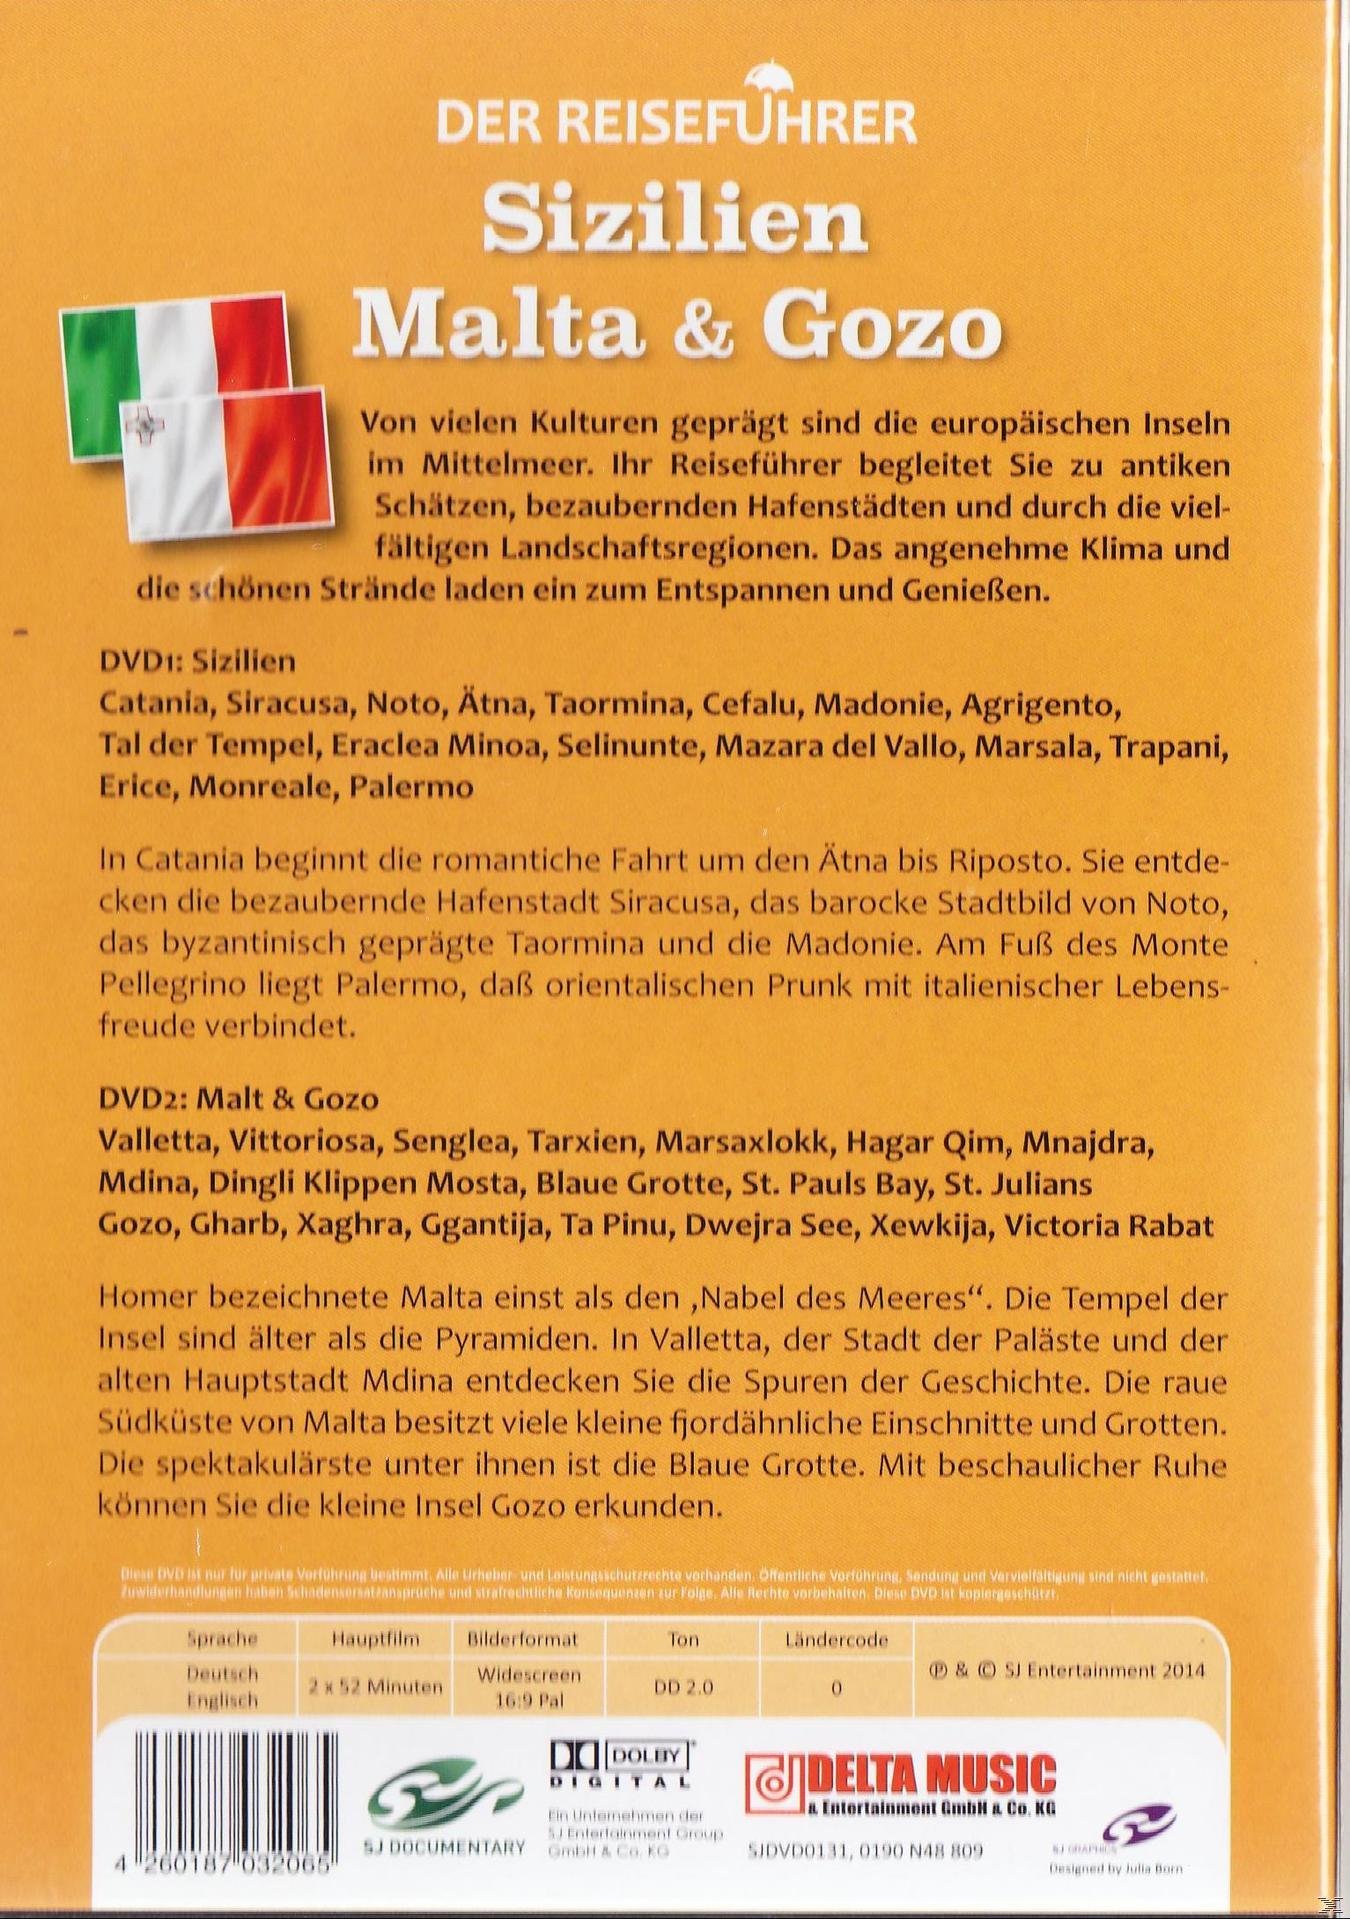 Der Reiseführer - DVD Sizilien, & Gozo Malta